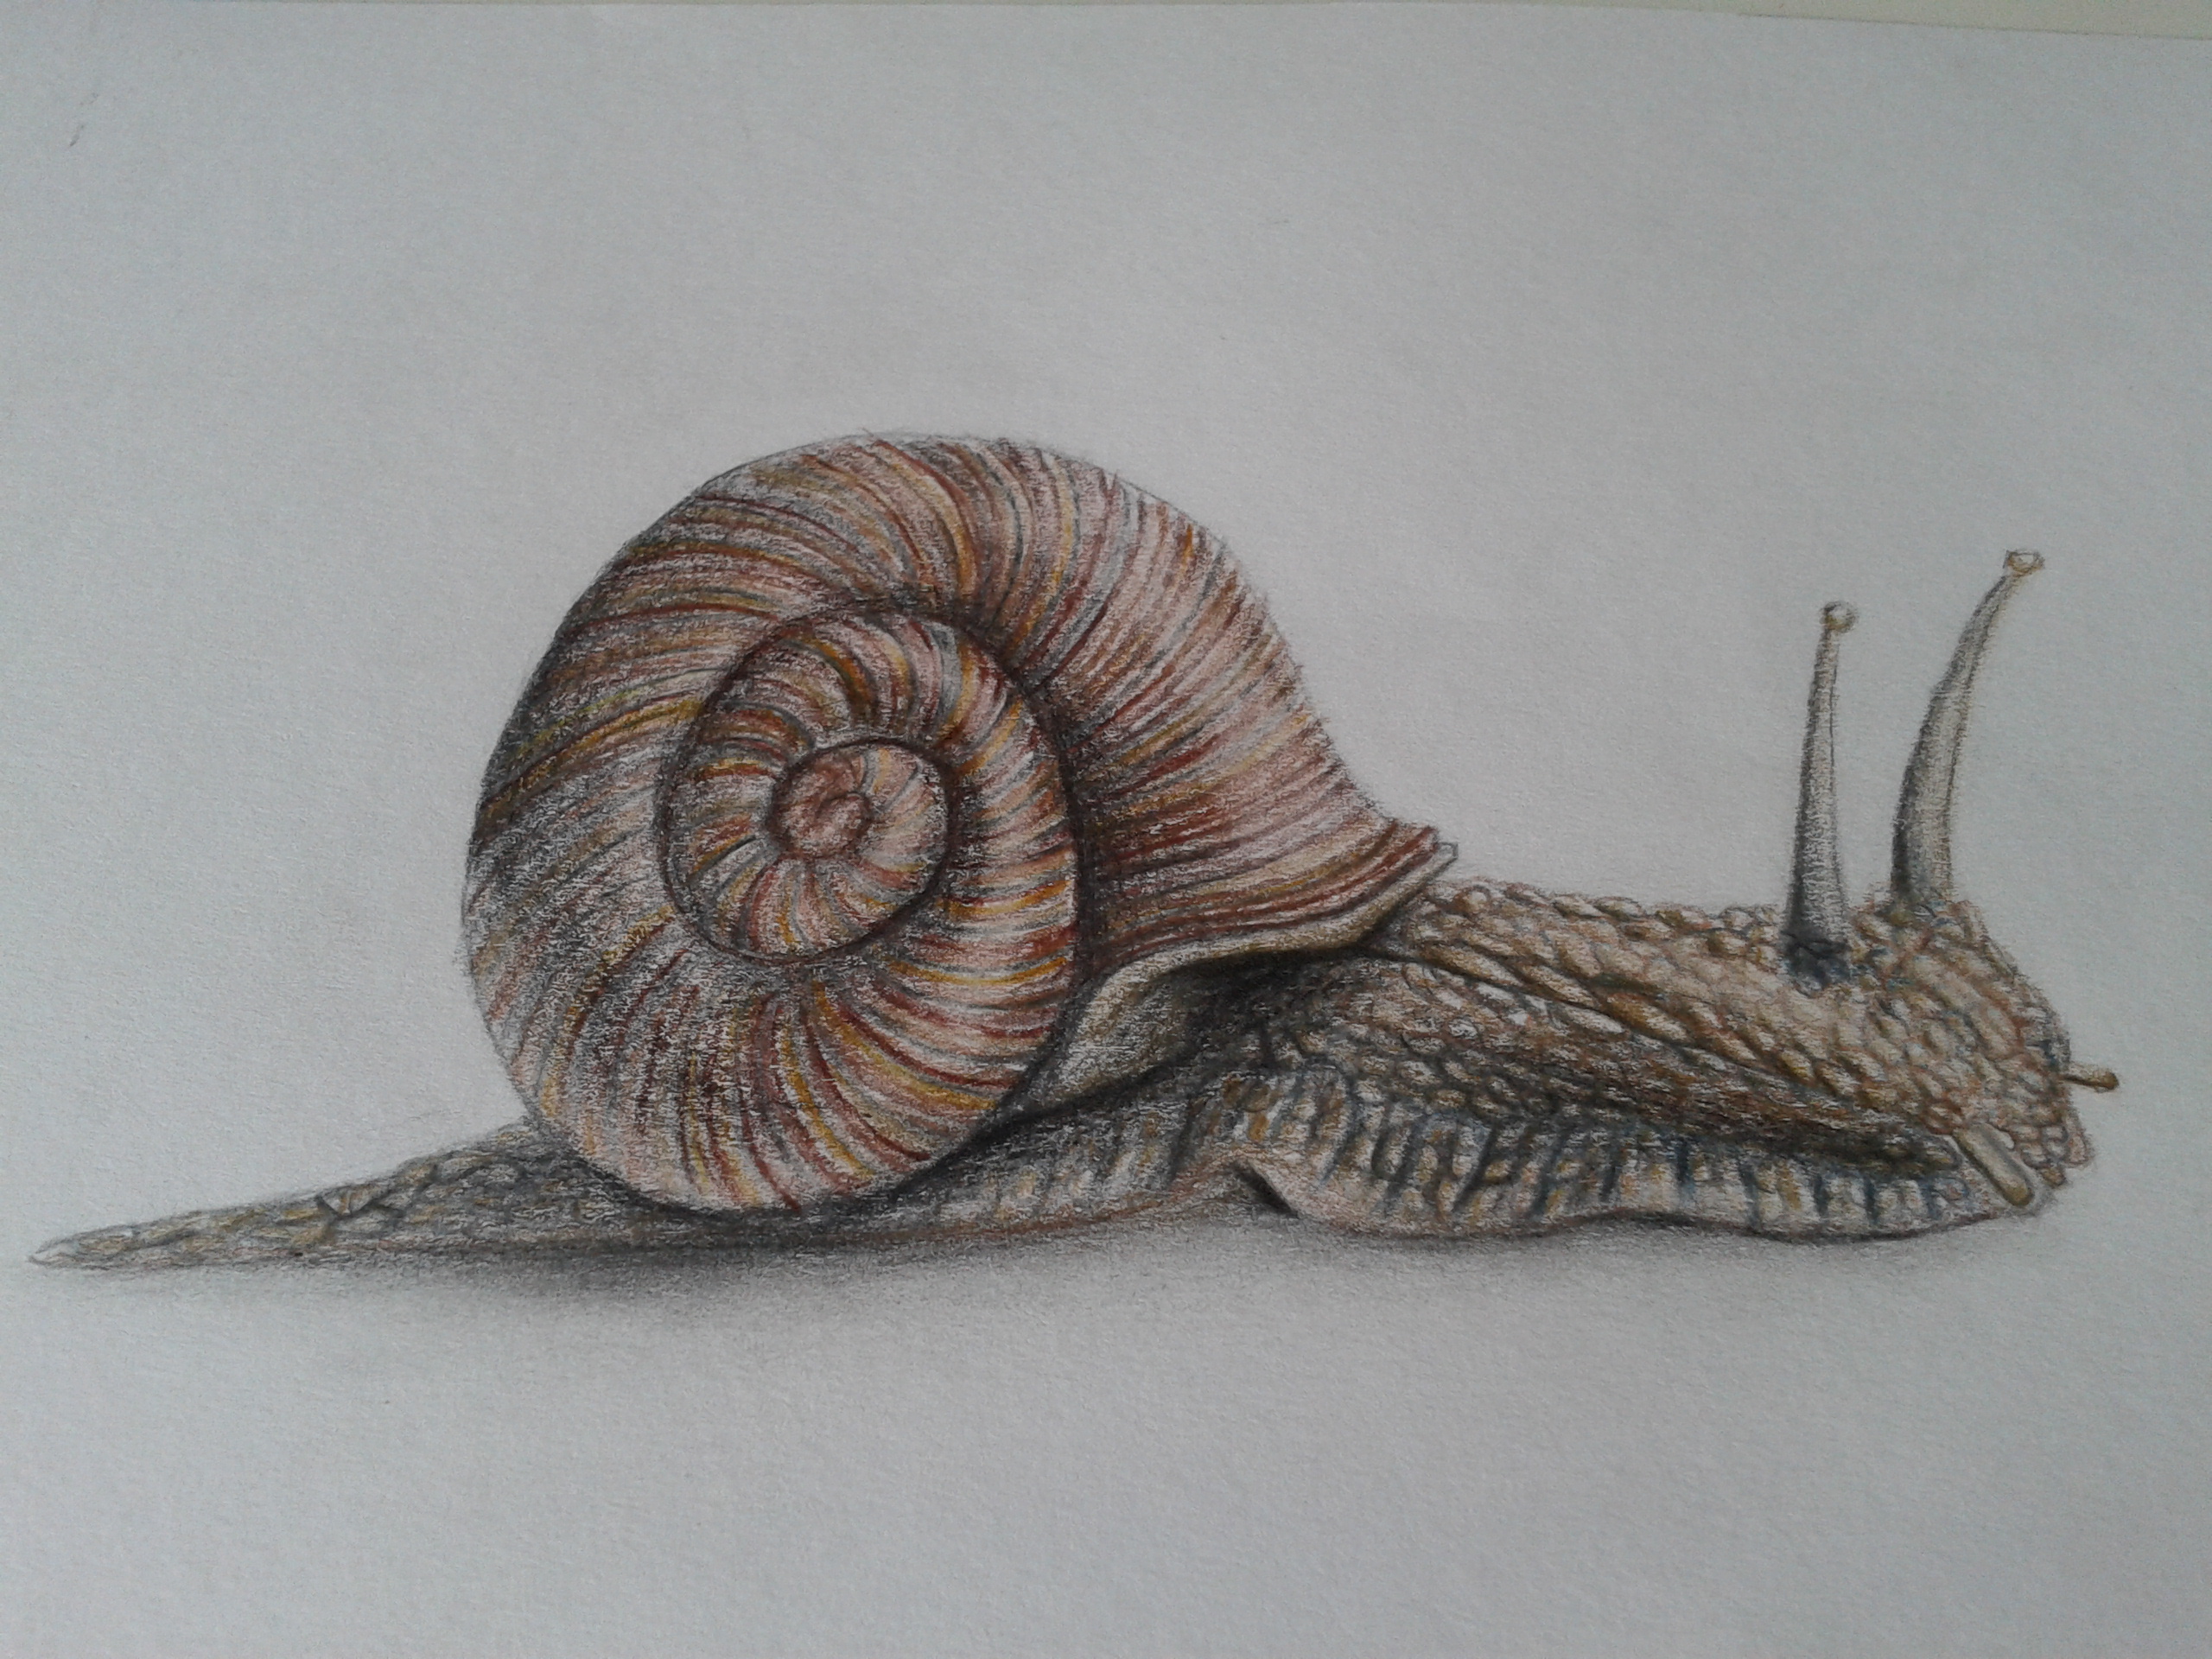 Realistic 3d snail drawing by Davidthorst on DeviantArt